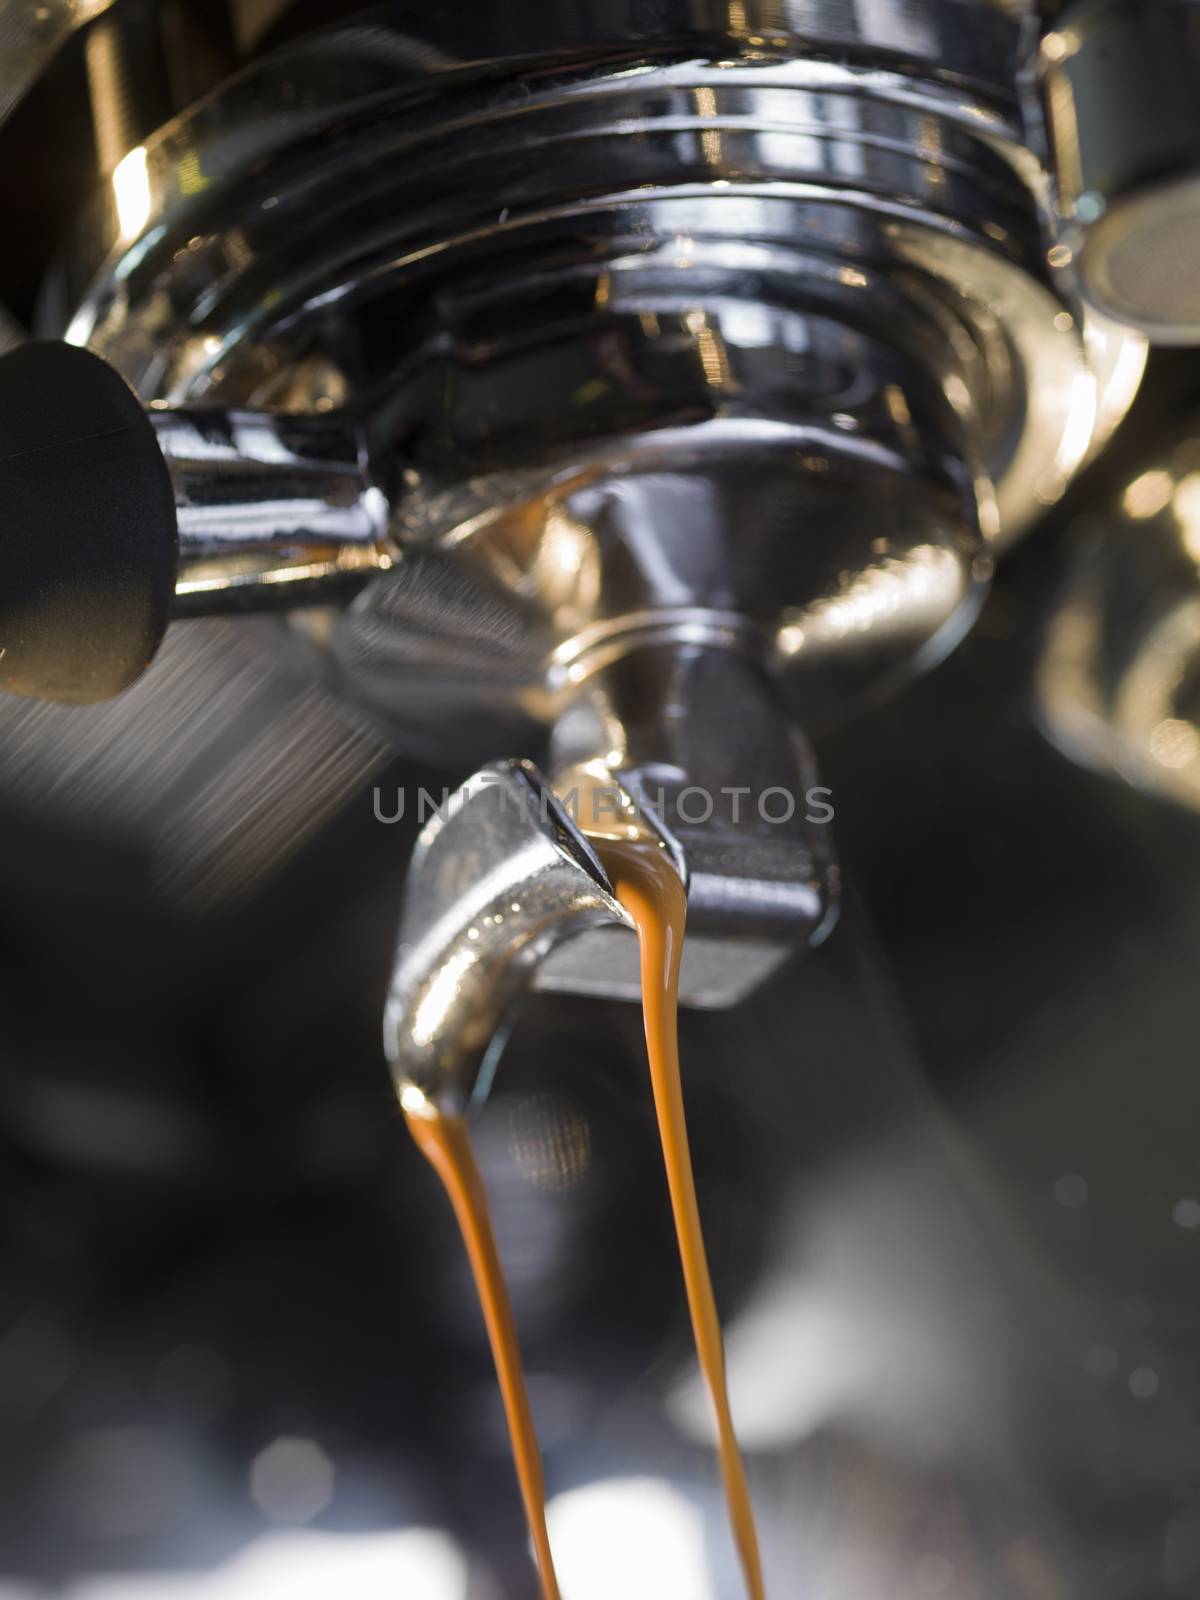 Espresso machine brewing a coffee espresso by janssenkruseproductions